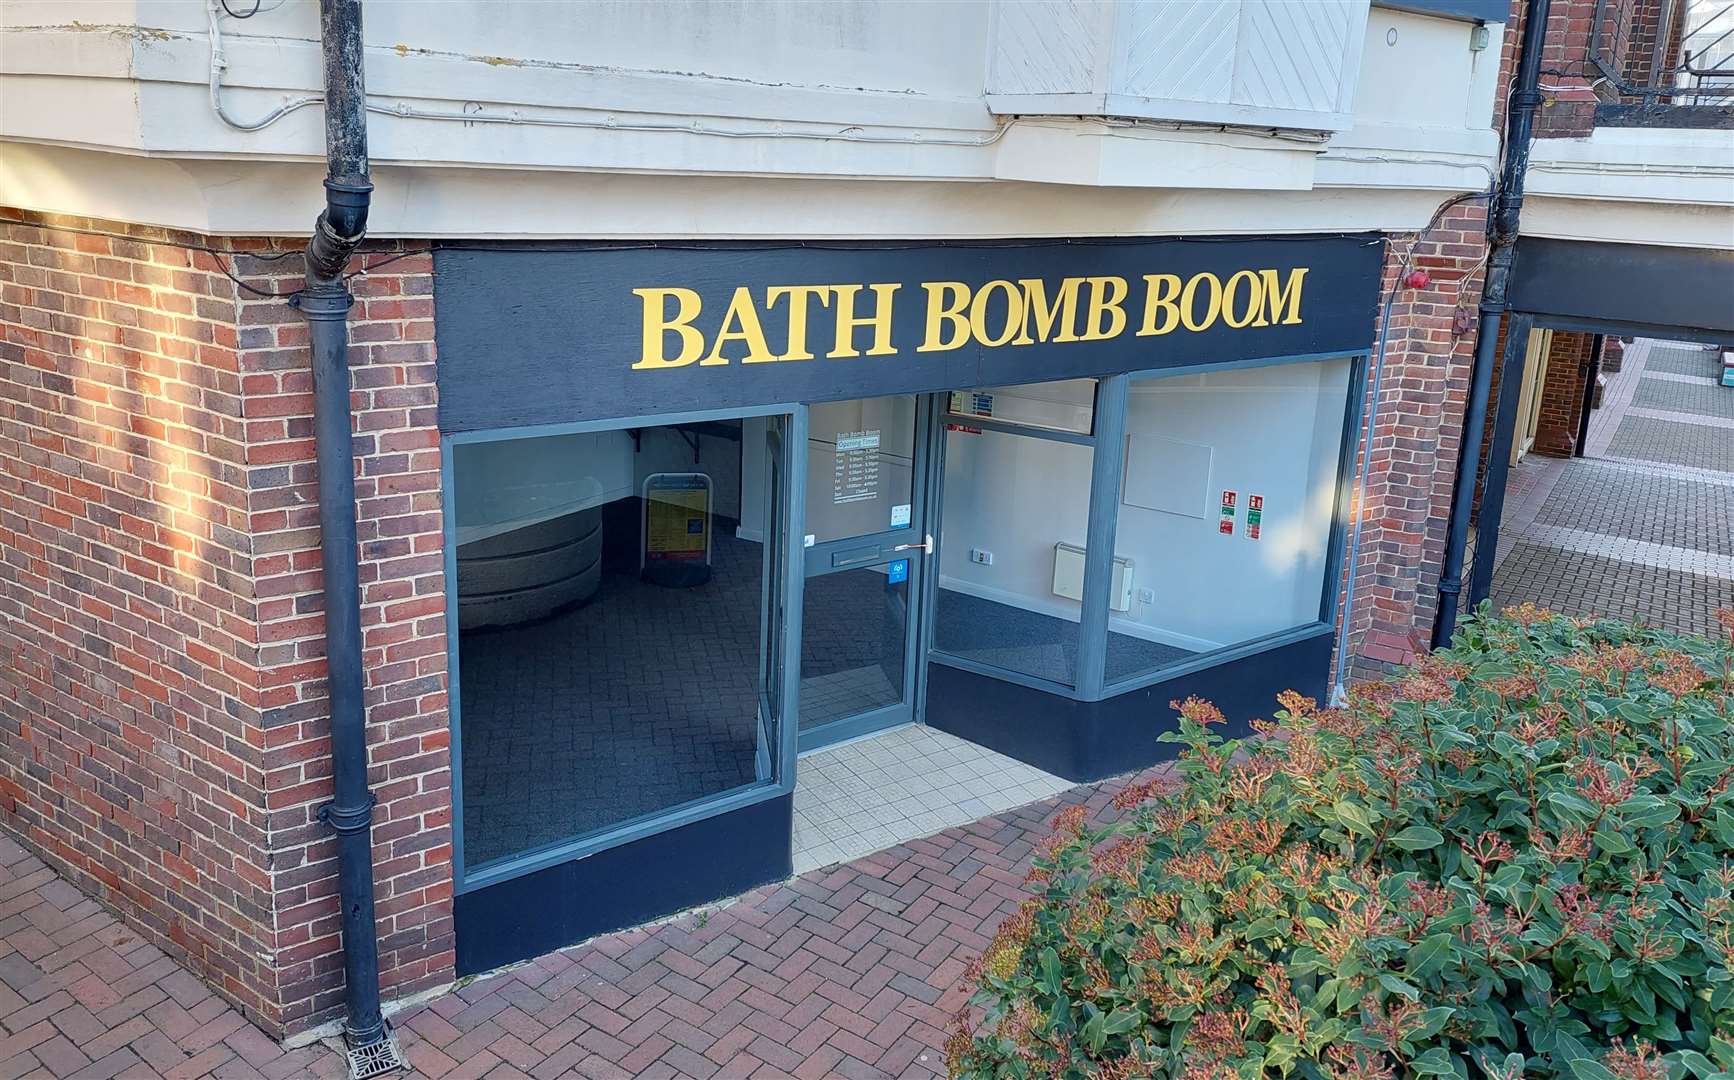 Ashford's Bath Bomb Boom shop opened in July